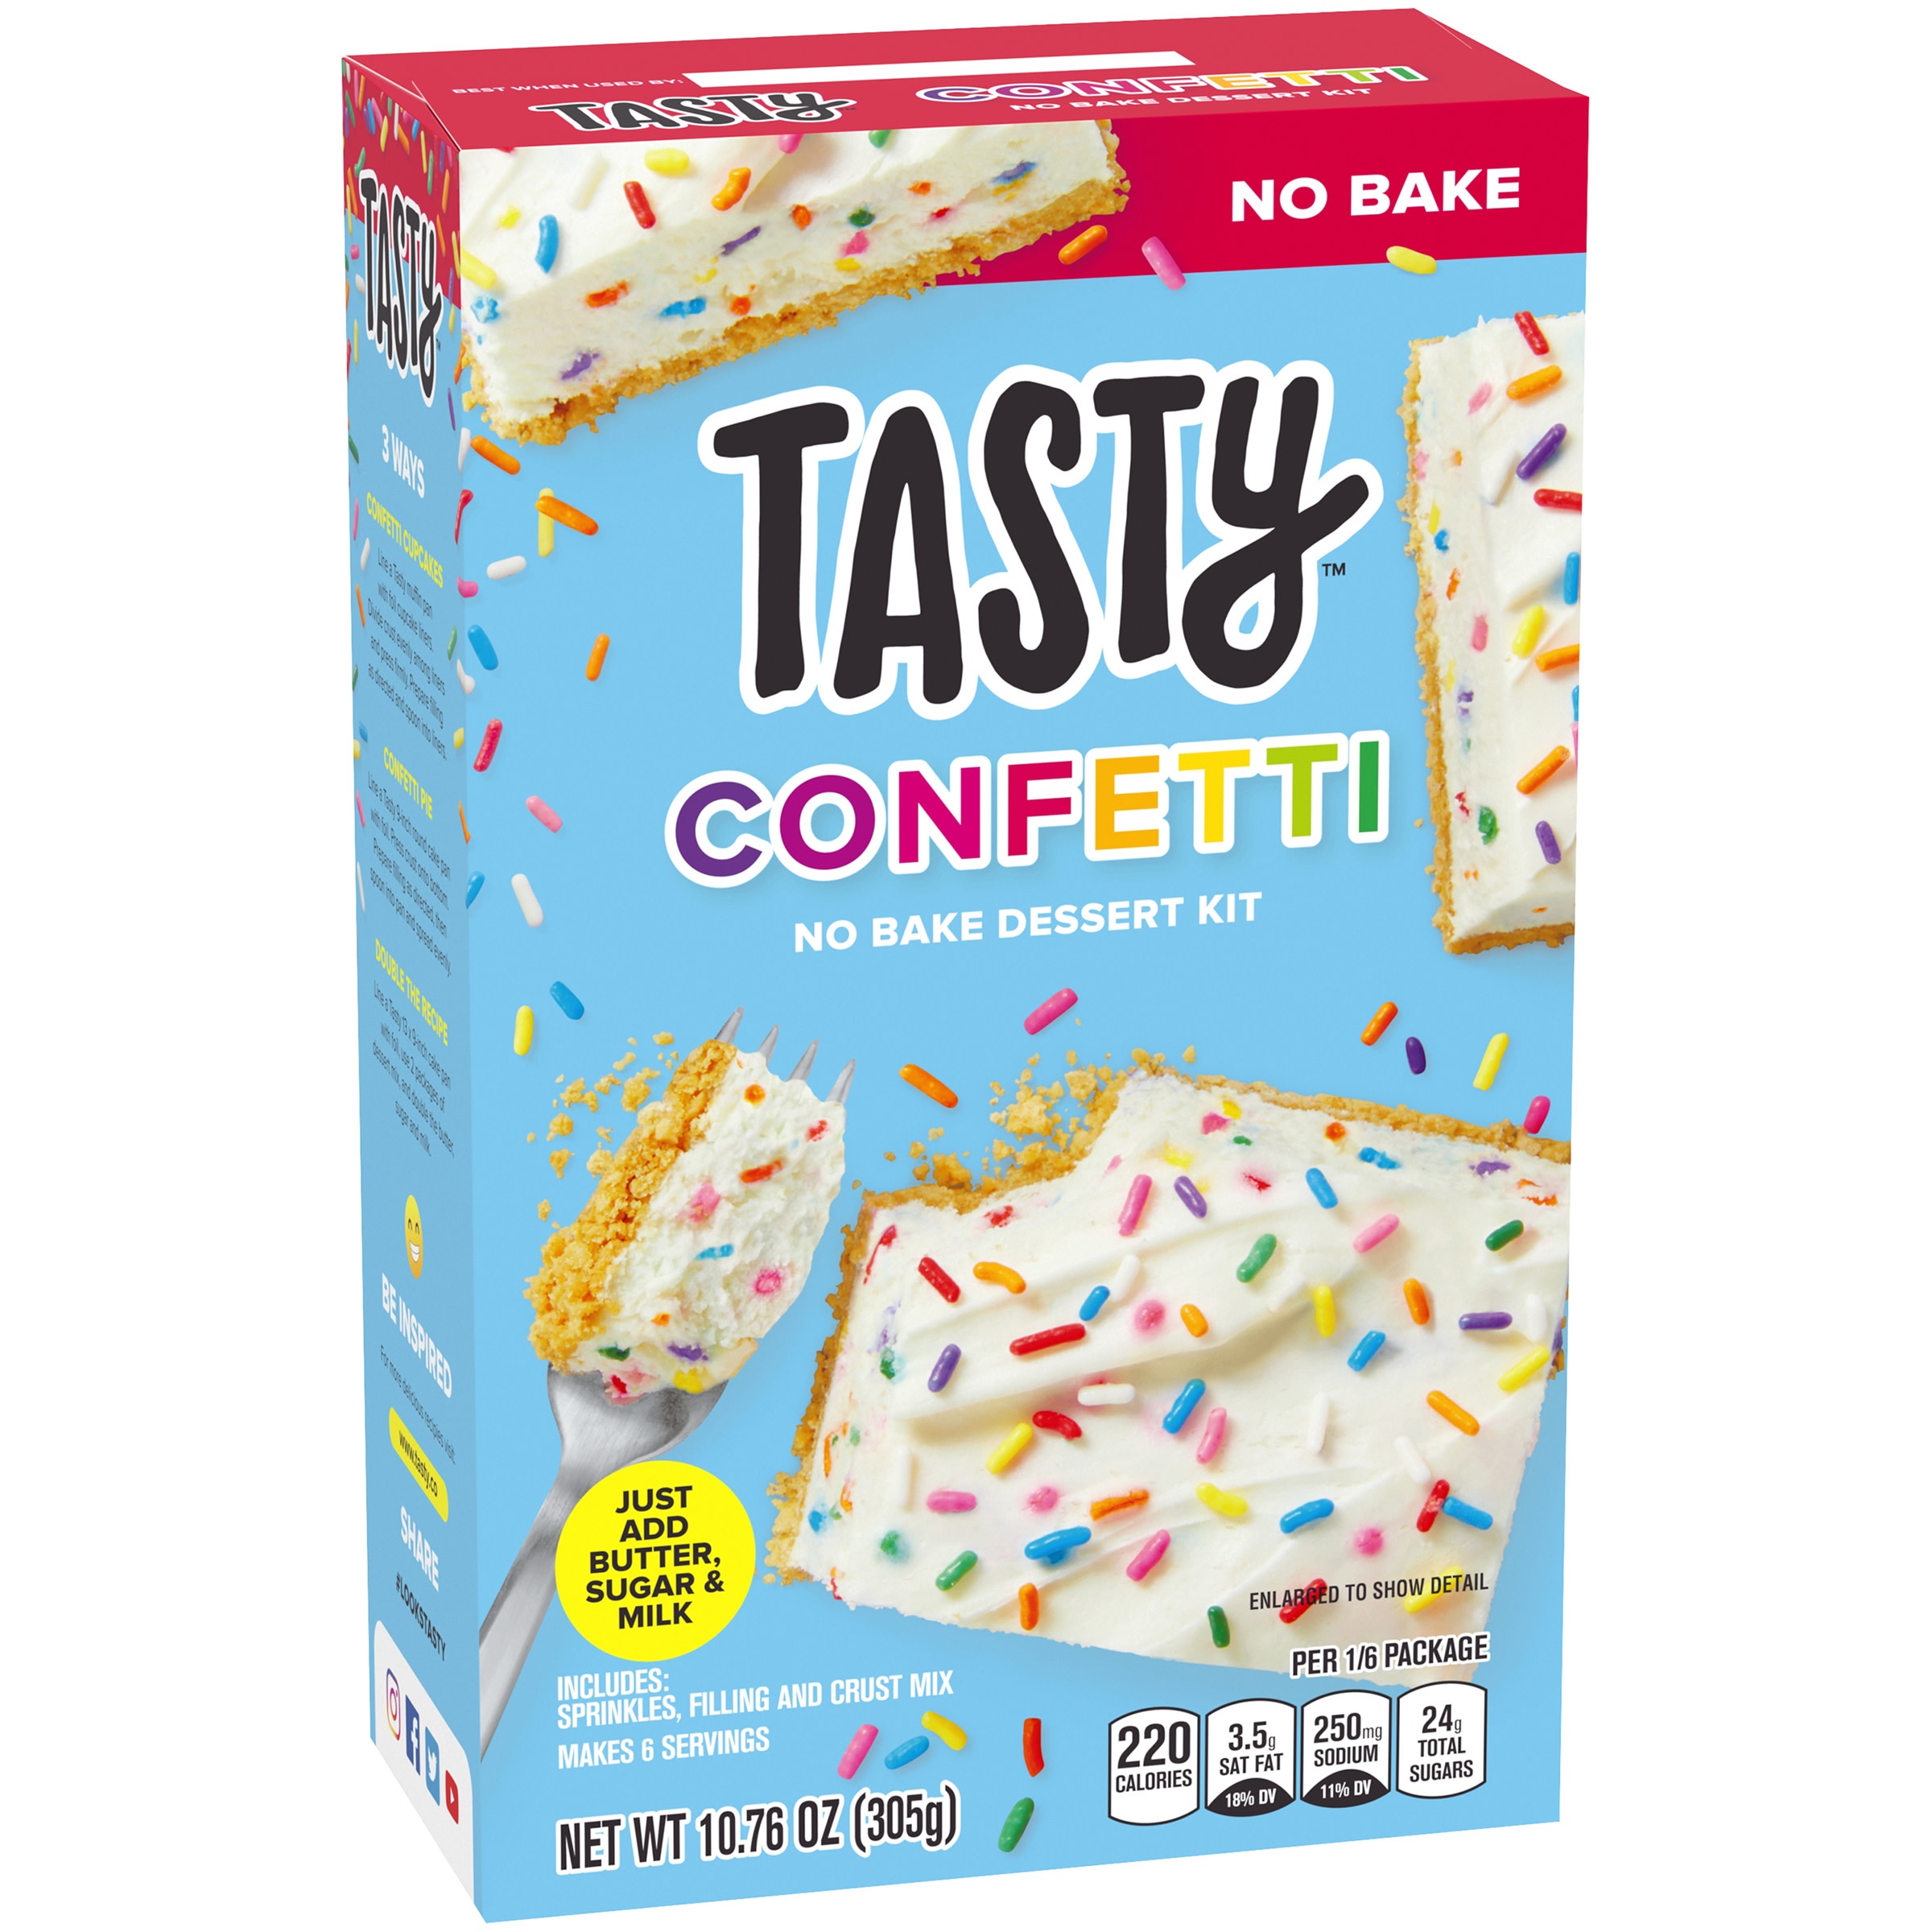 Tasty No Bake Confetti Dessert Kit with Sprinkles, Filling & Crust Mix, 10.76 oz Box - image 3 of 8